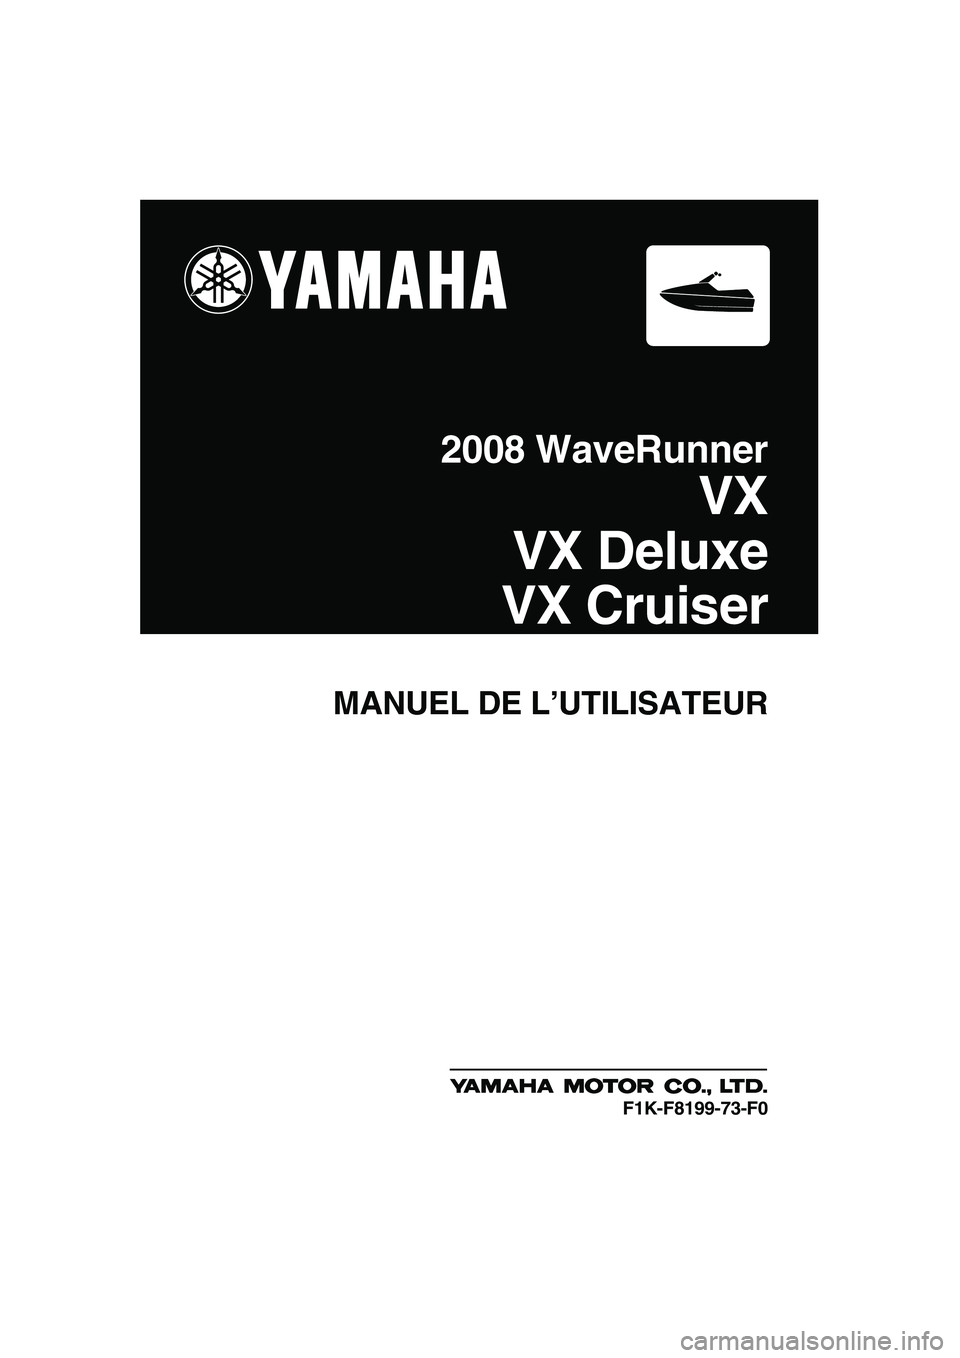 YAMAHA VX 2008  Notices Demploi (in French) MANUEL DE L’UTILISATEUR
2008 WaveRunner
VX
VX Deluxe
VX Cruiser
F1K-F8199-73-F0
UF1K73F0.book  Page 1  Wednesday, July 11, 2007  4:05 PM 